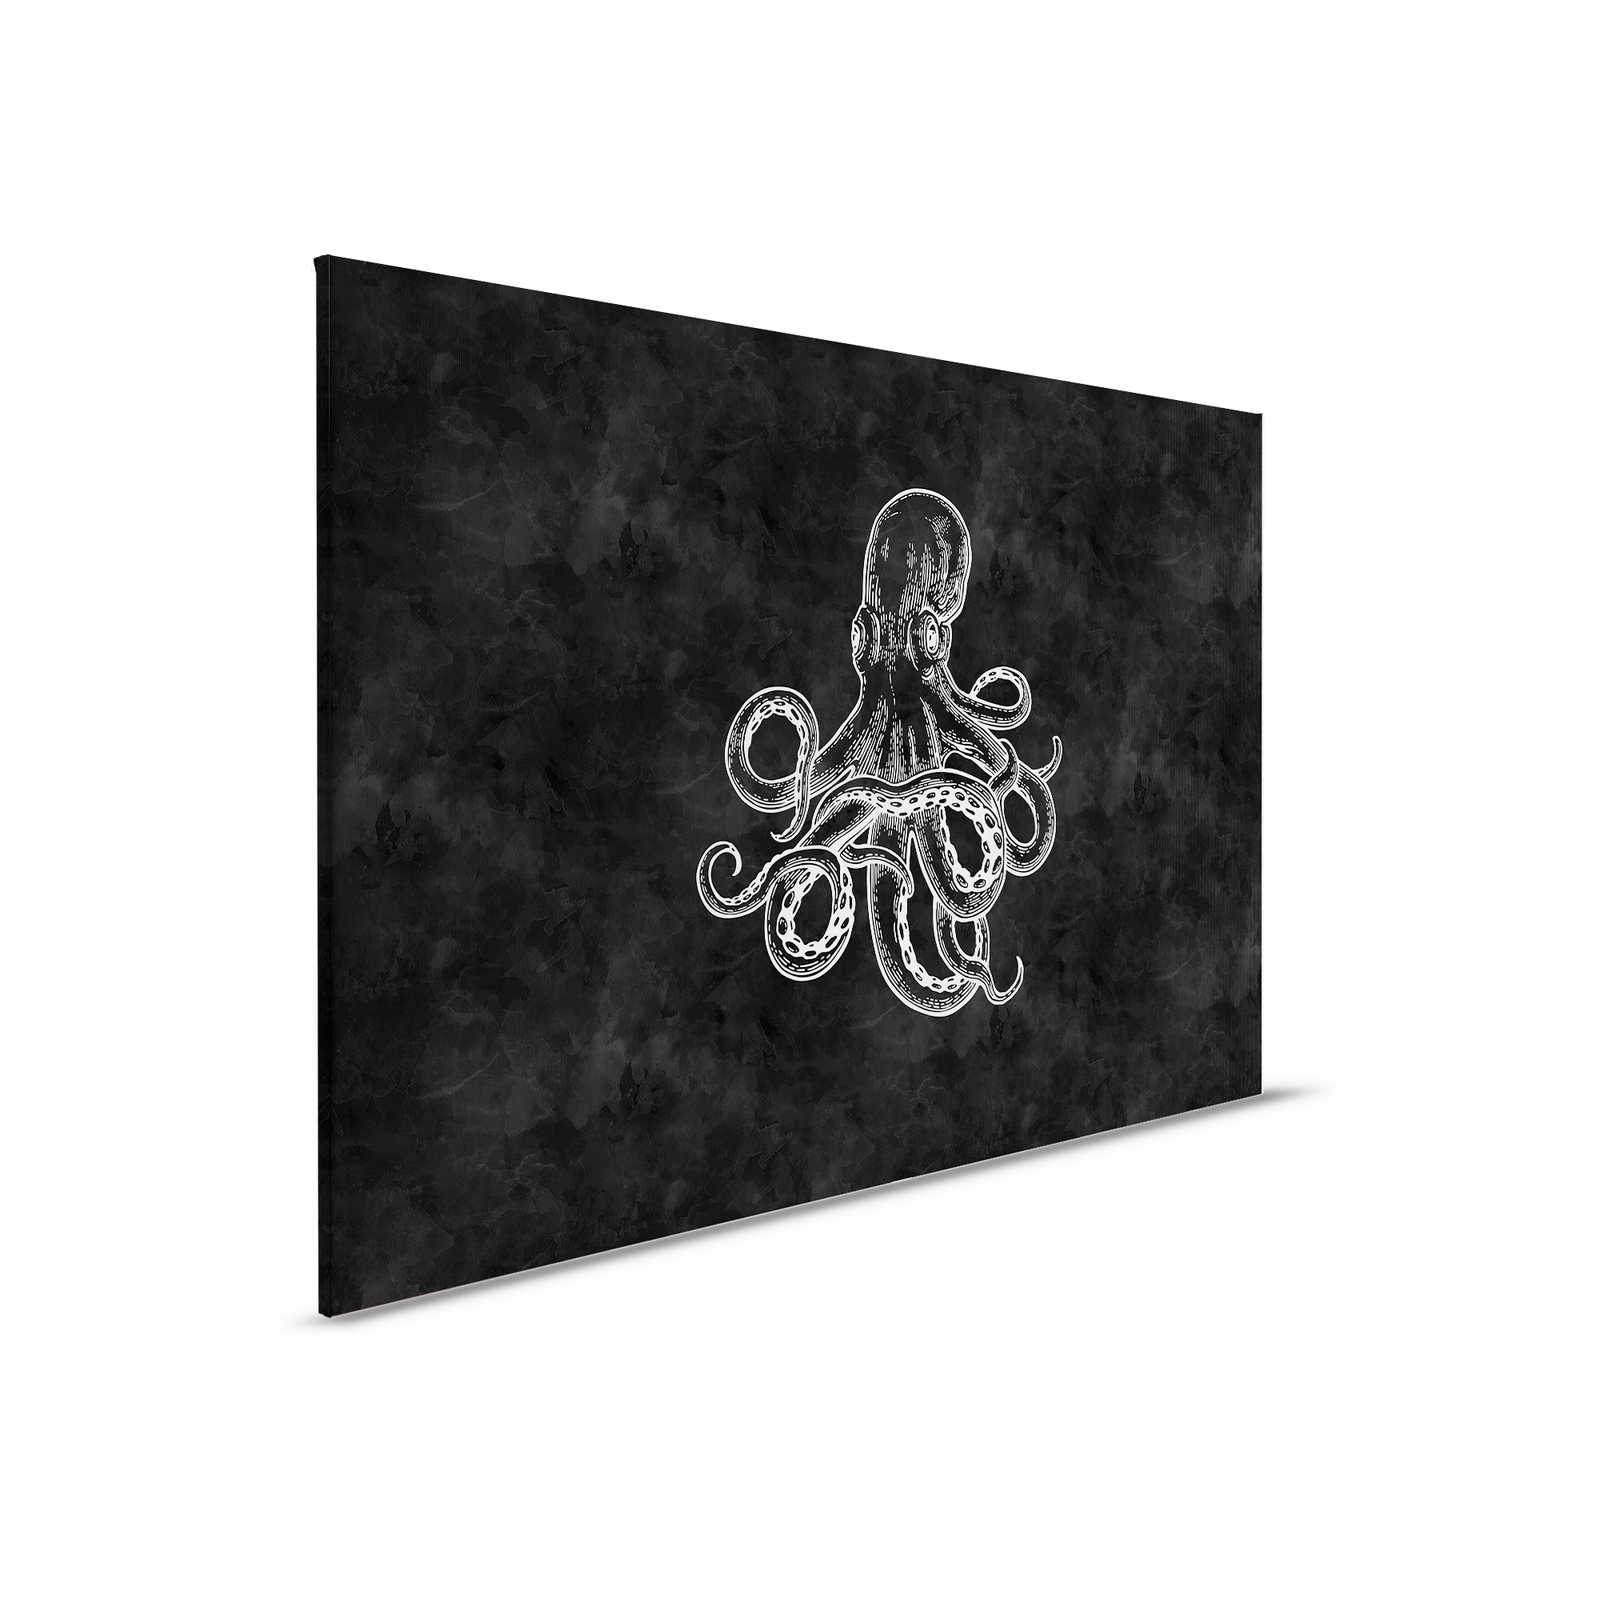 Black & White Canvas Octopus & Blackboard Look - 0.90 m x 0.60 m
